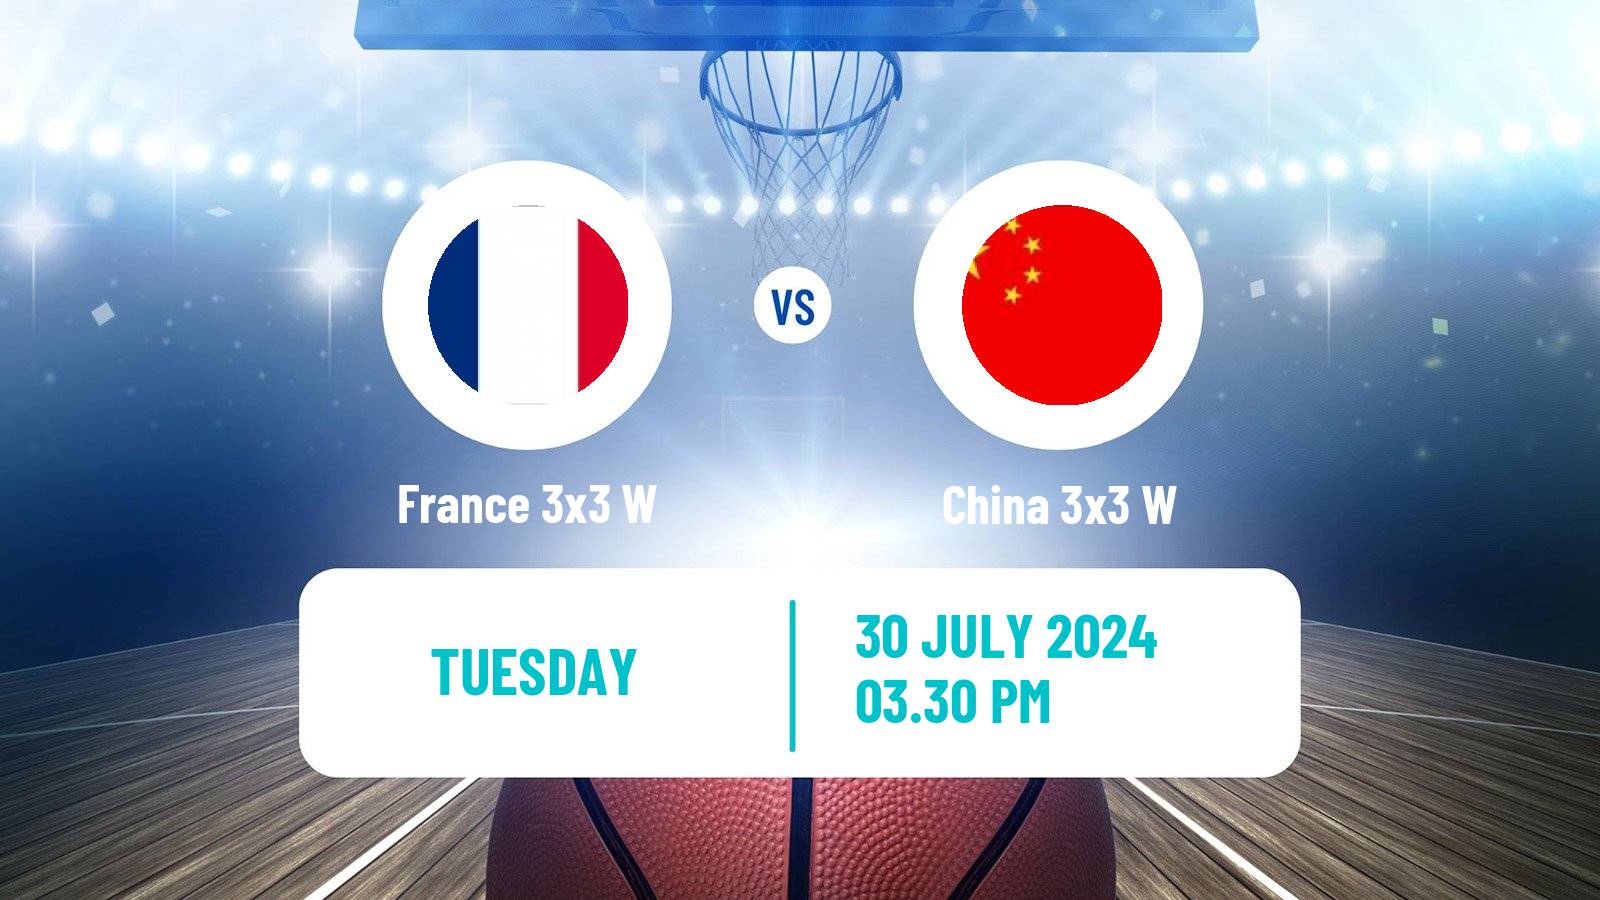 Basketball Olympic Games Basketball 3x3 Women France 3x3 W - China 3x3 W